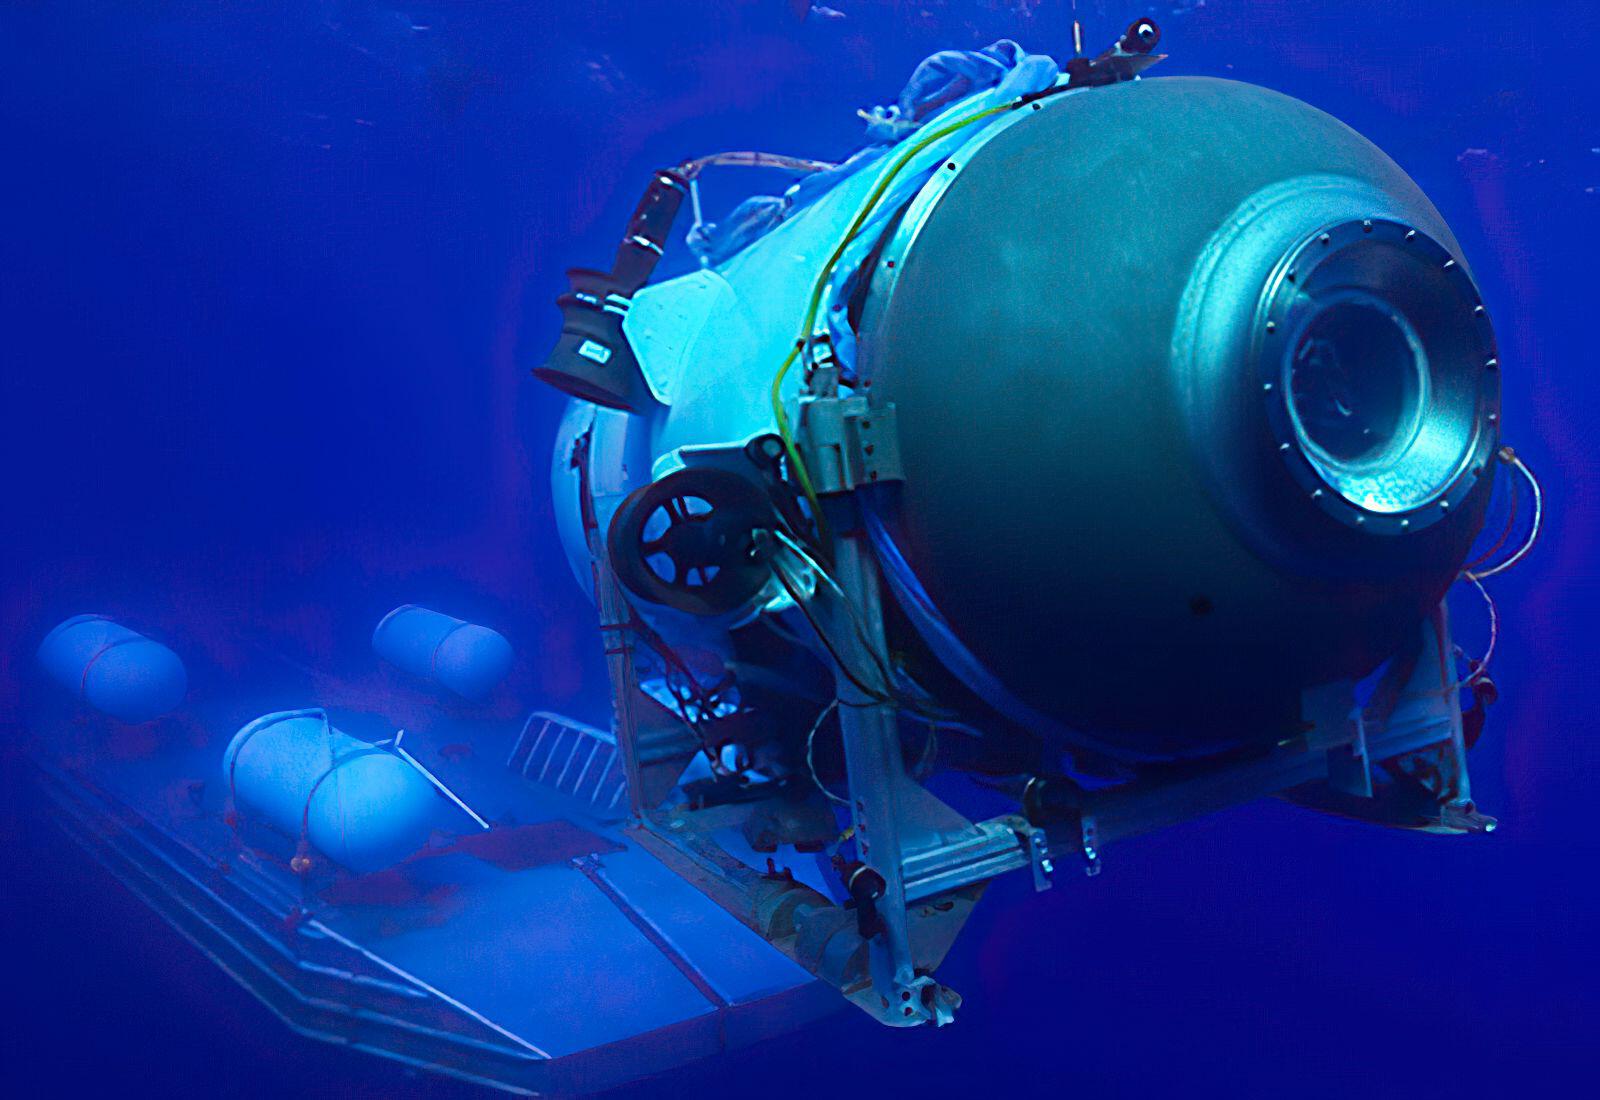 The OceanGate submersible “Titan” near its underwater launch platform.